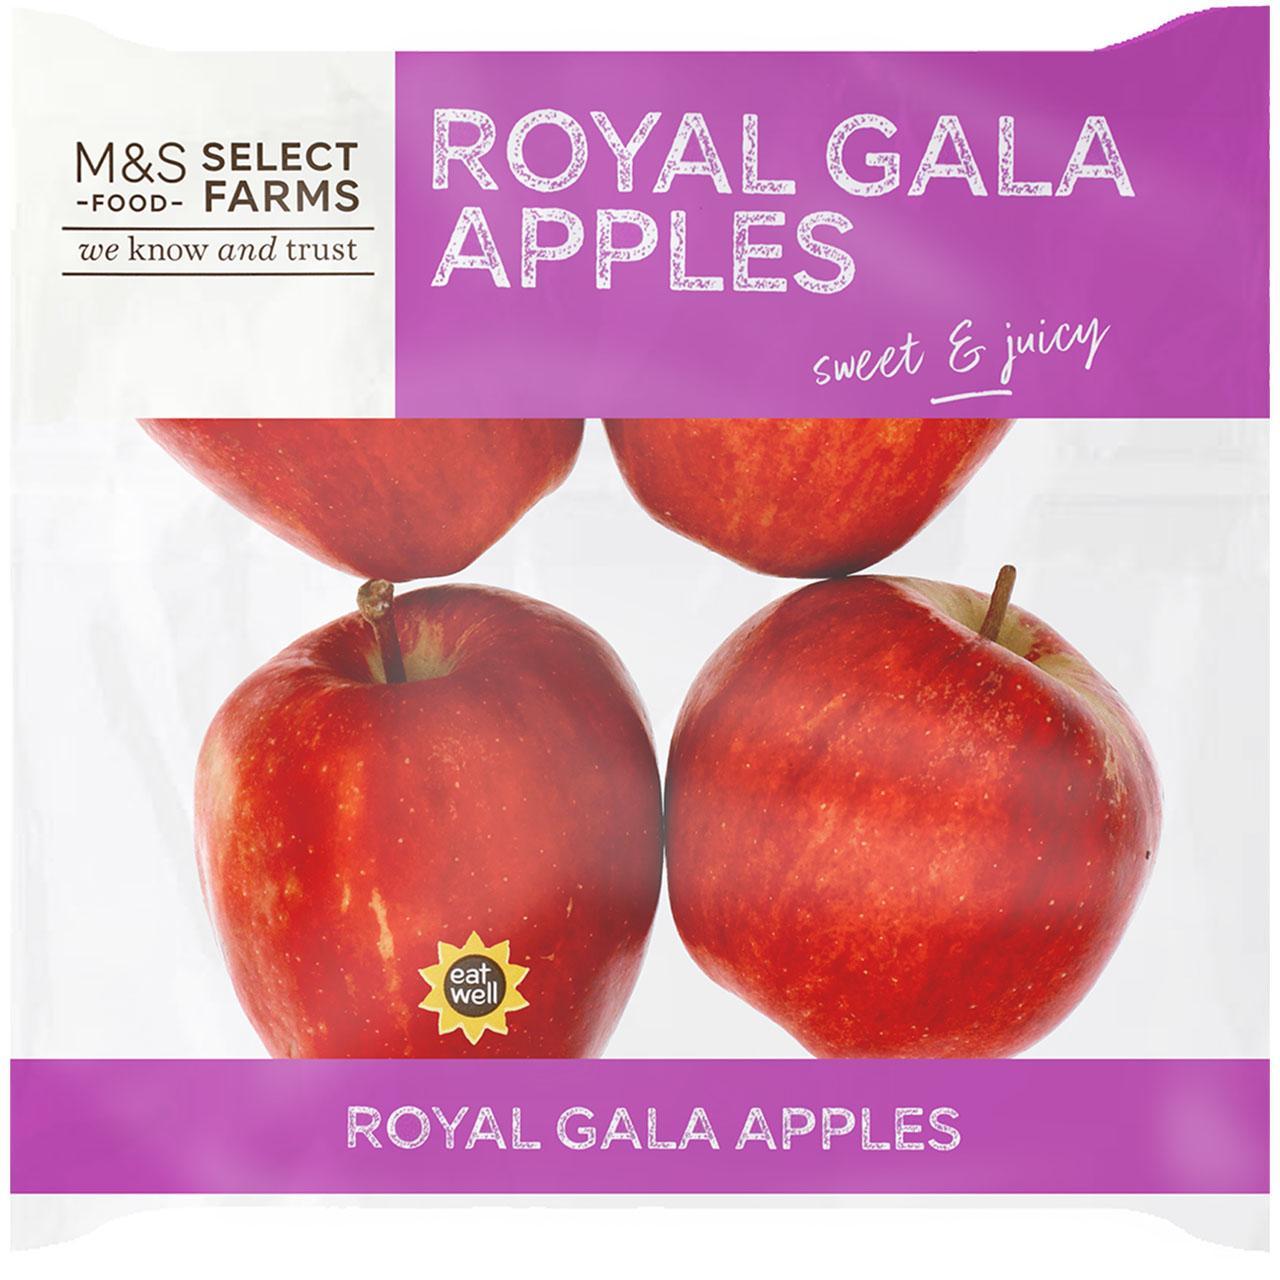 M&S Royal Gala Apples